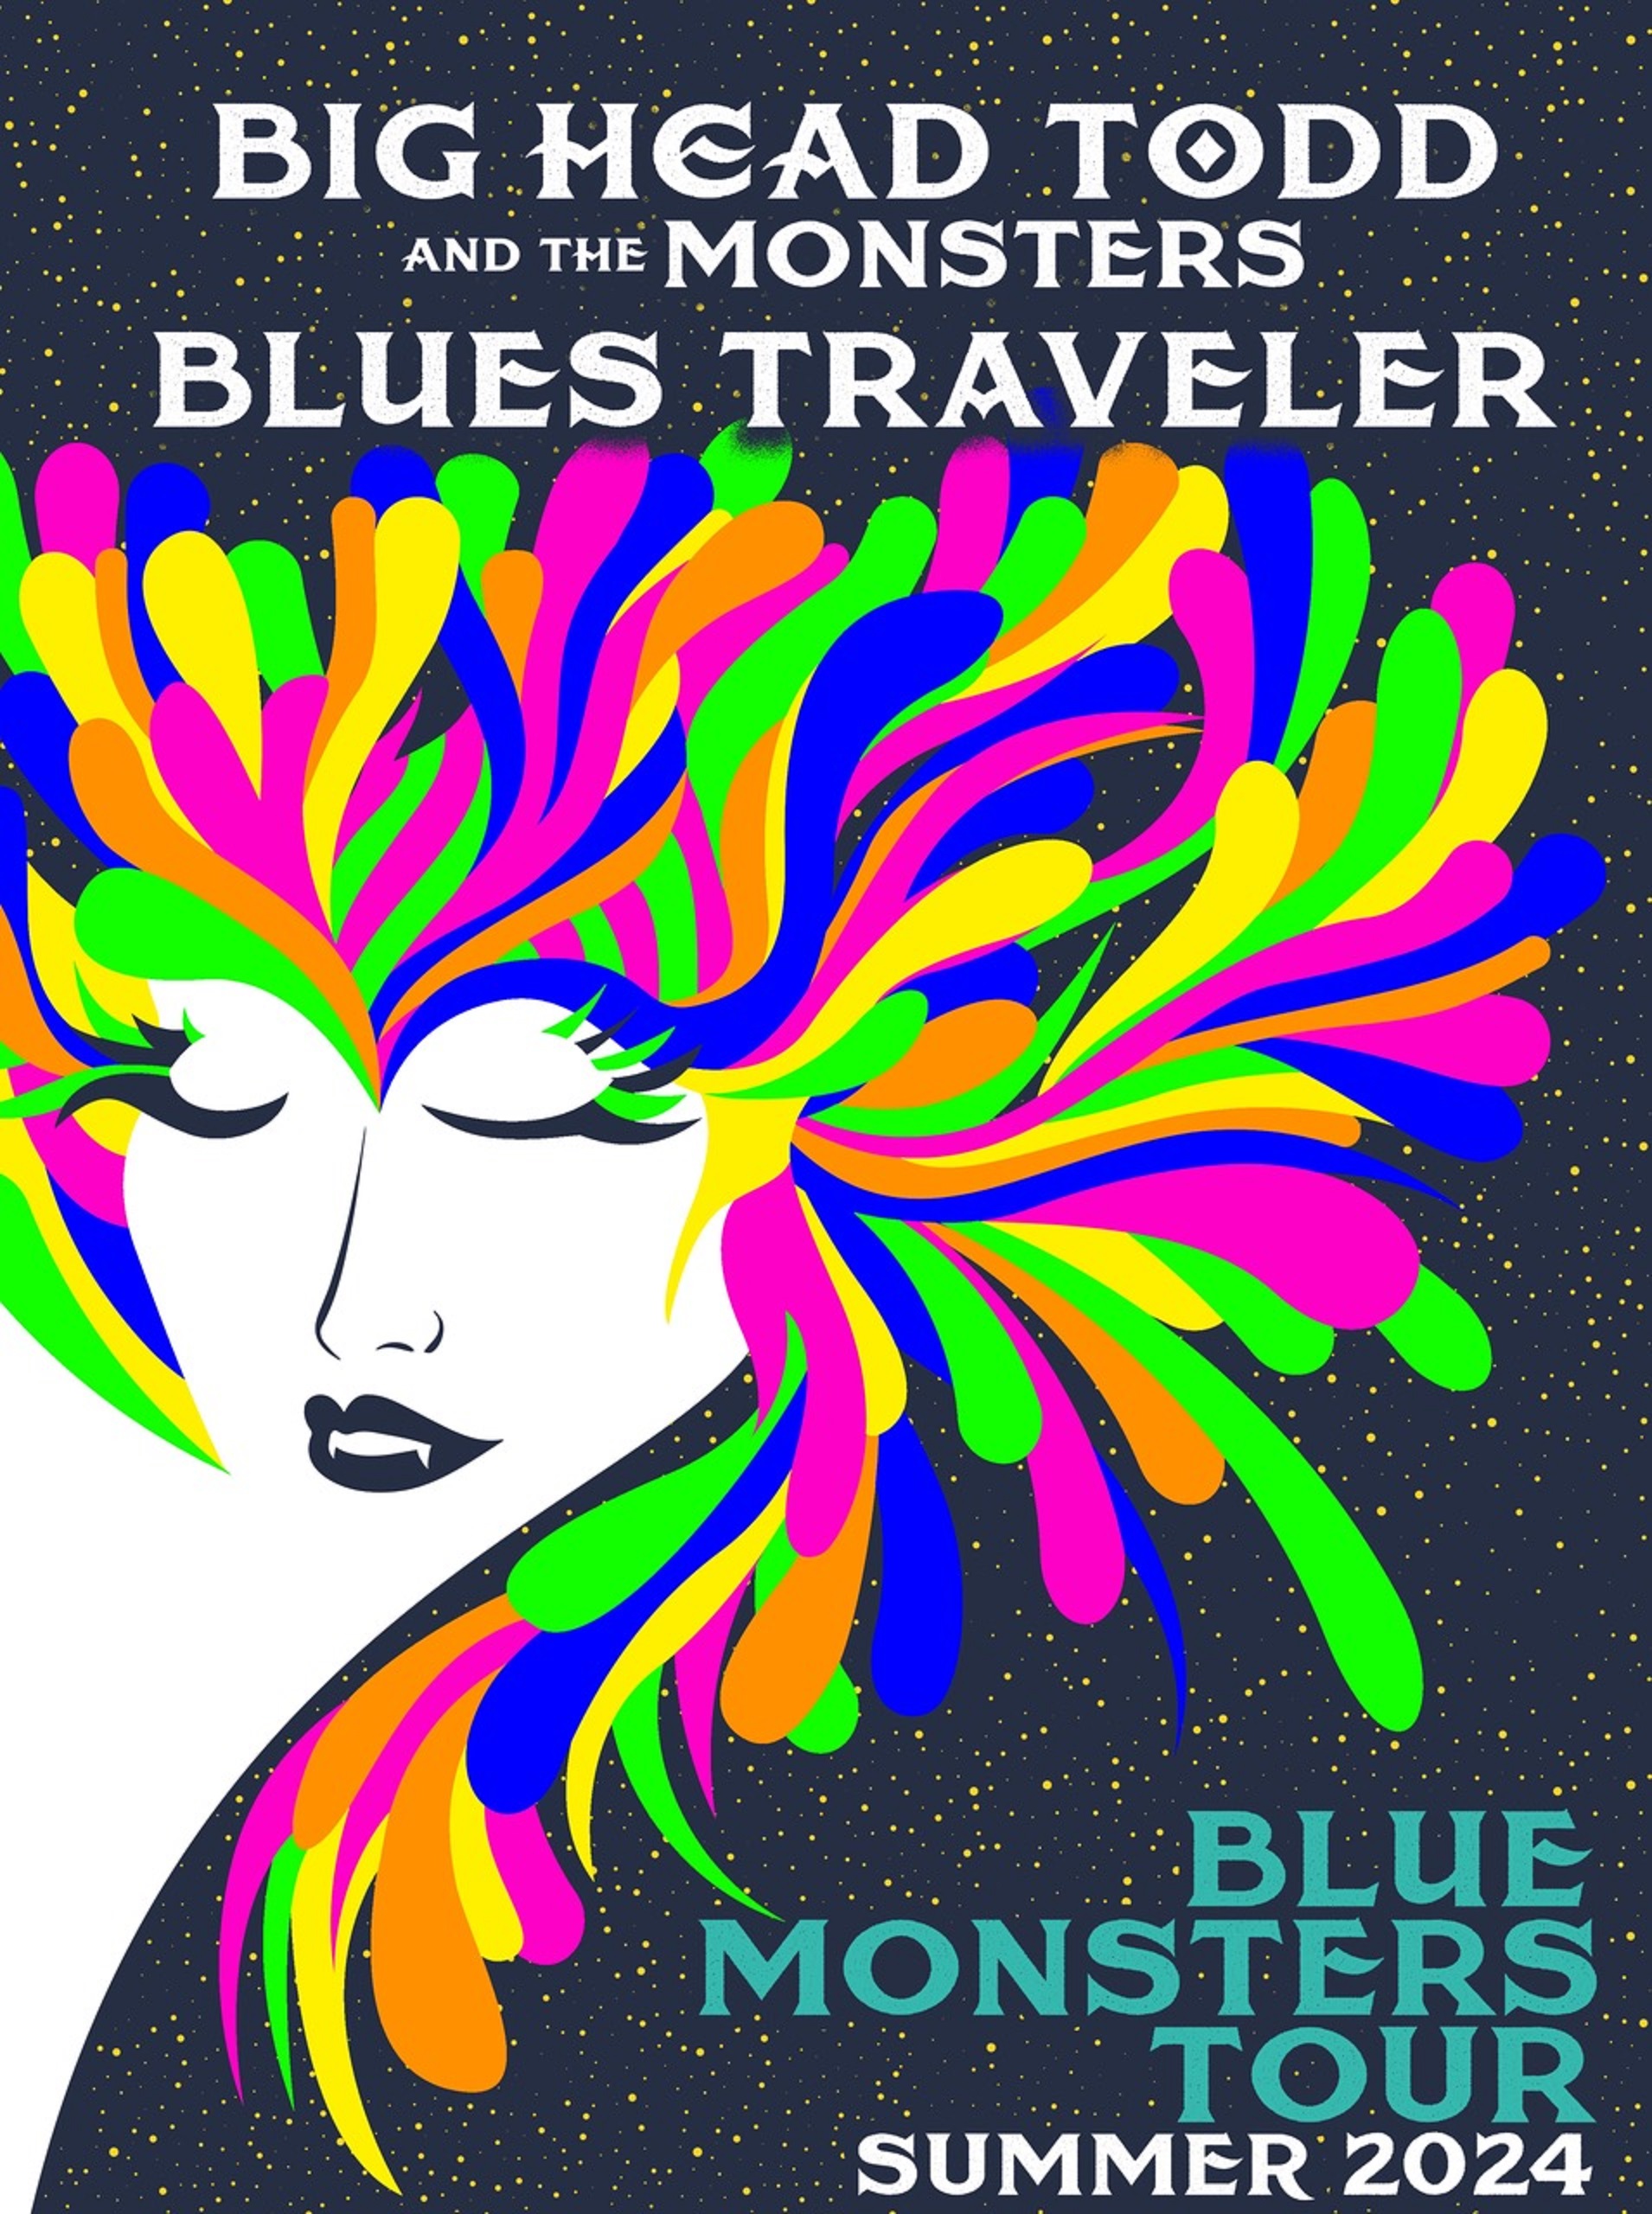 blues traveler tour history